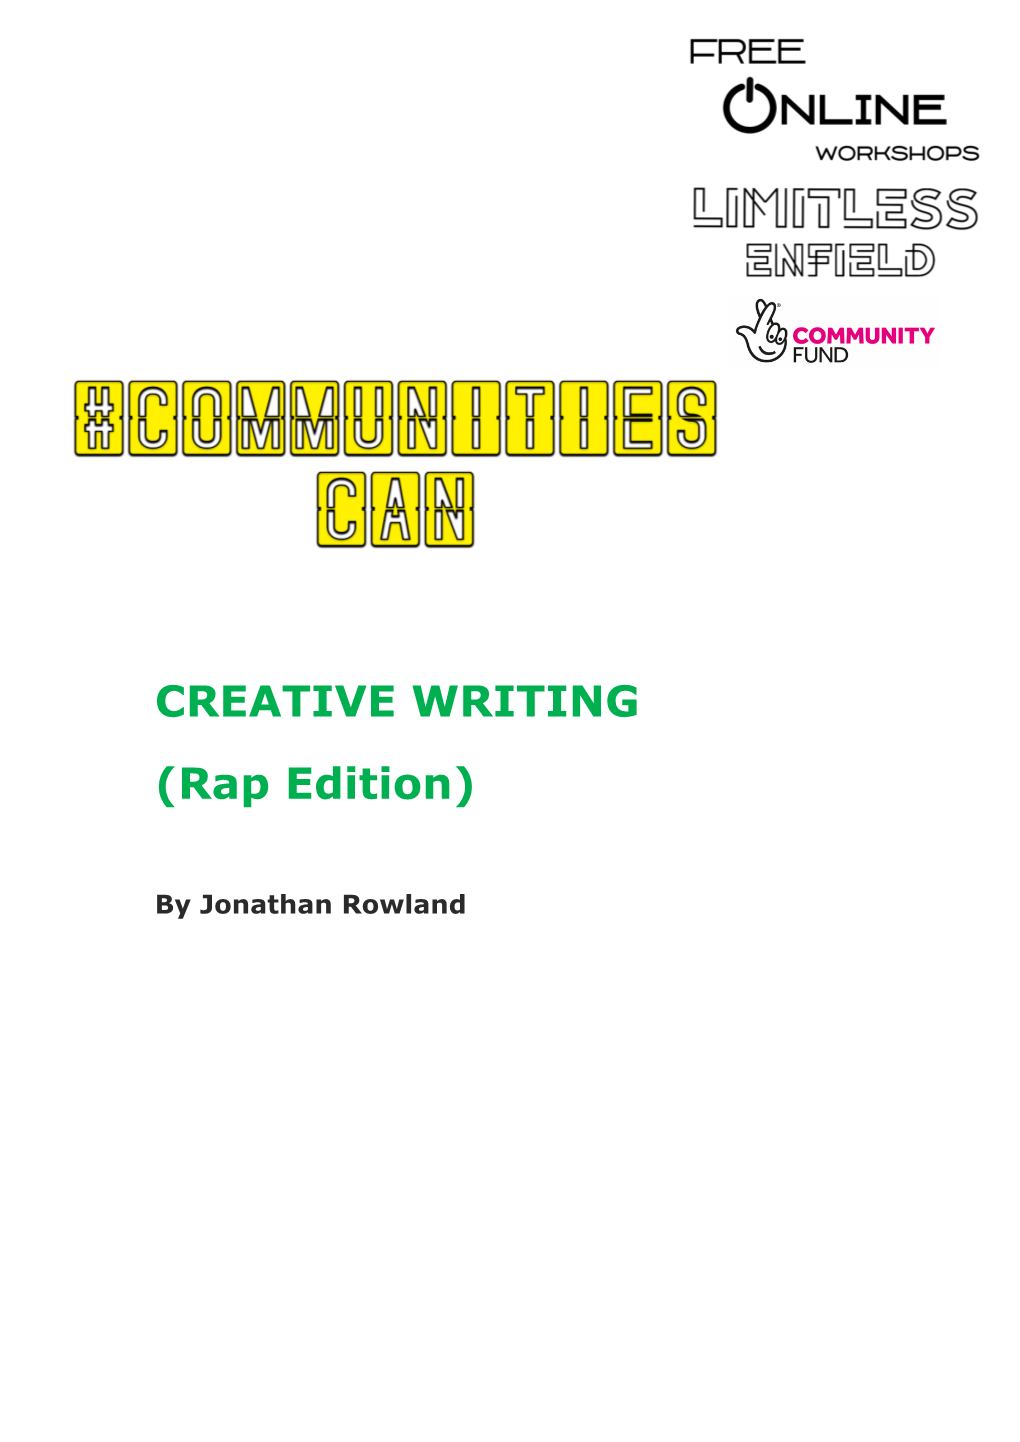 CREATIVE WRITING (Rap Edition)